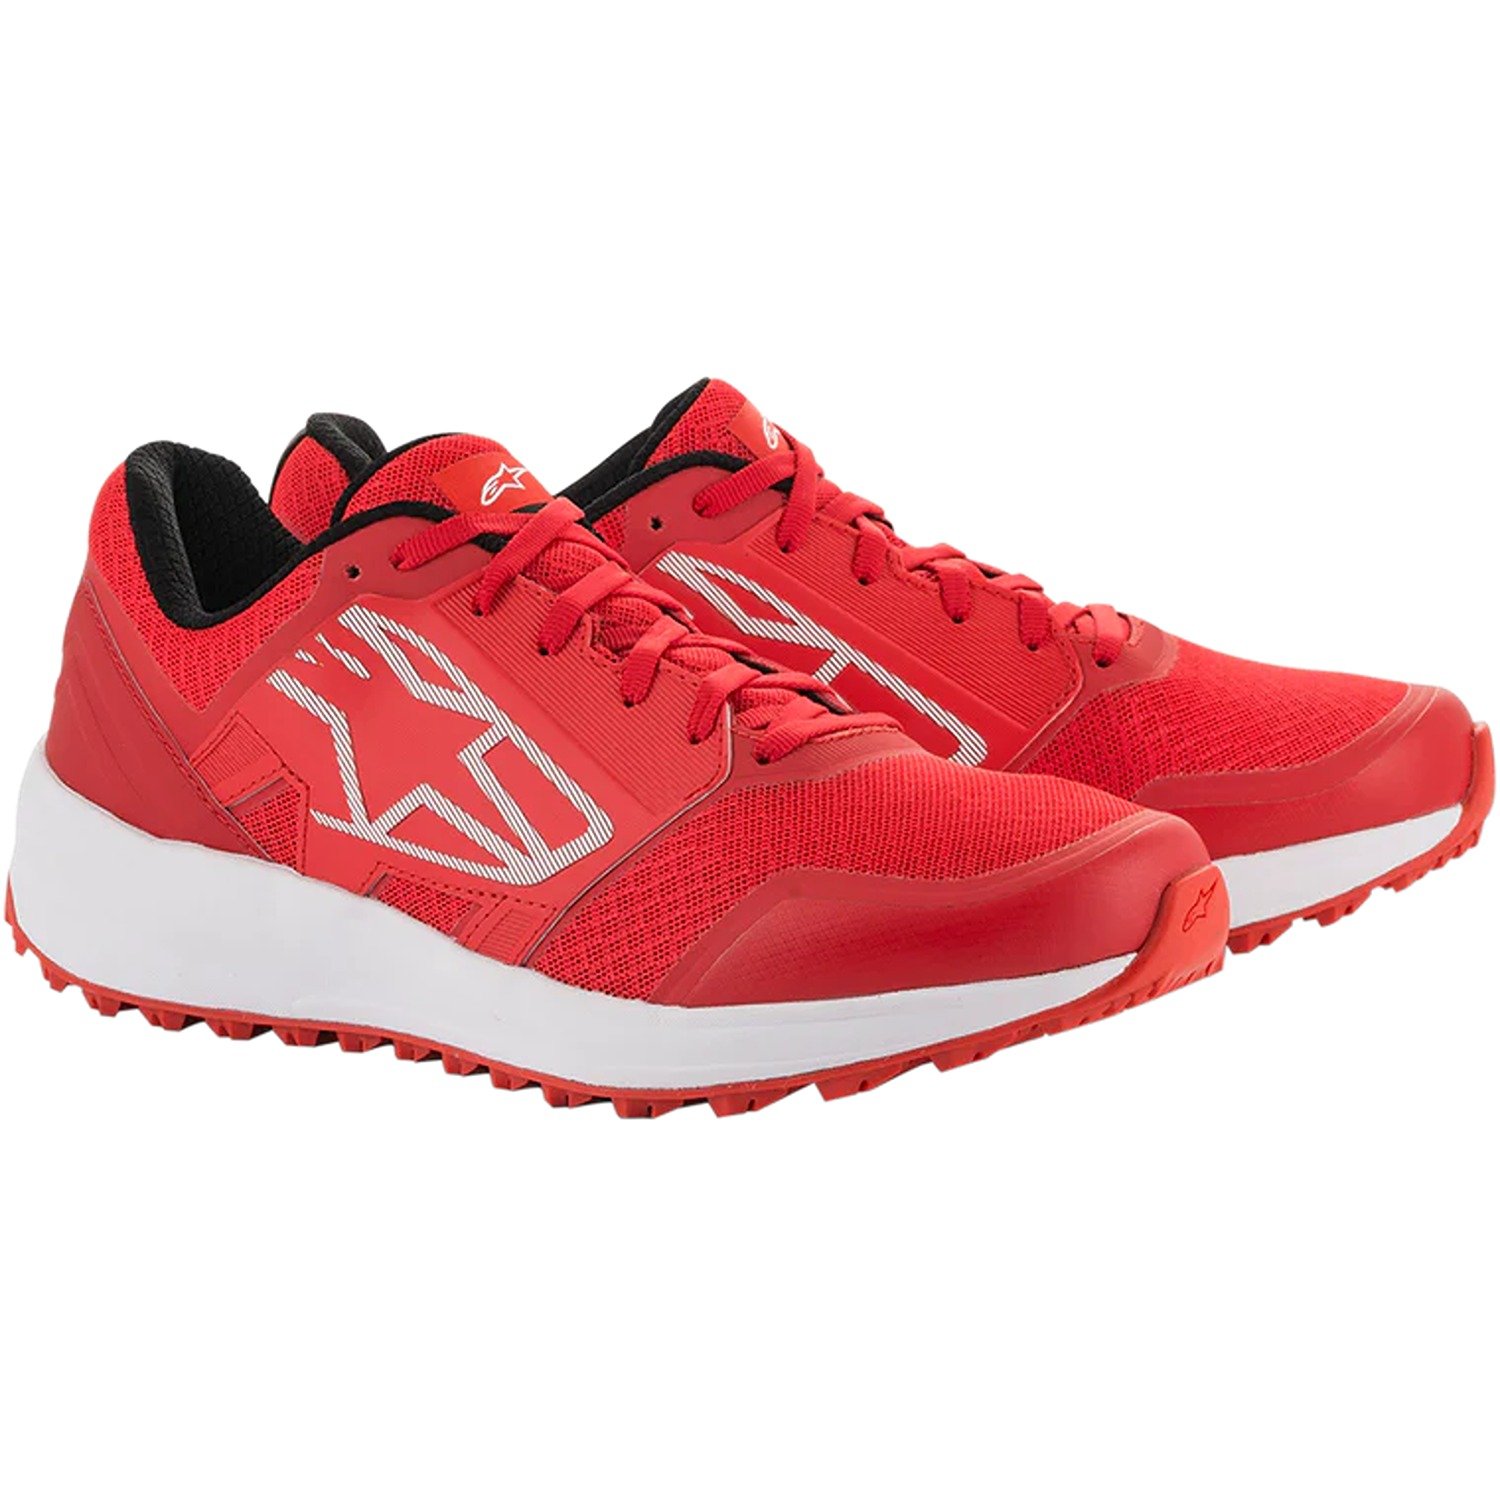 Image of Alpinestars Meta Trail Shoes Red White Size US 11 EN